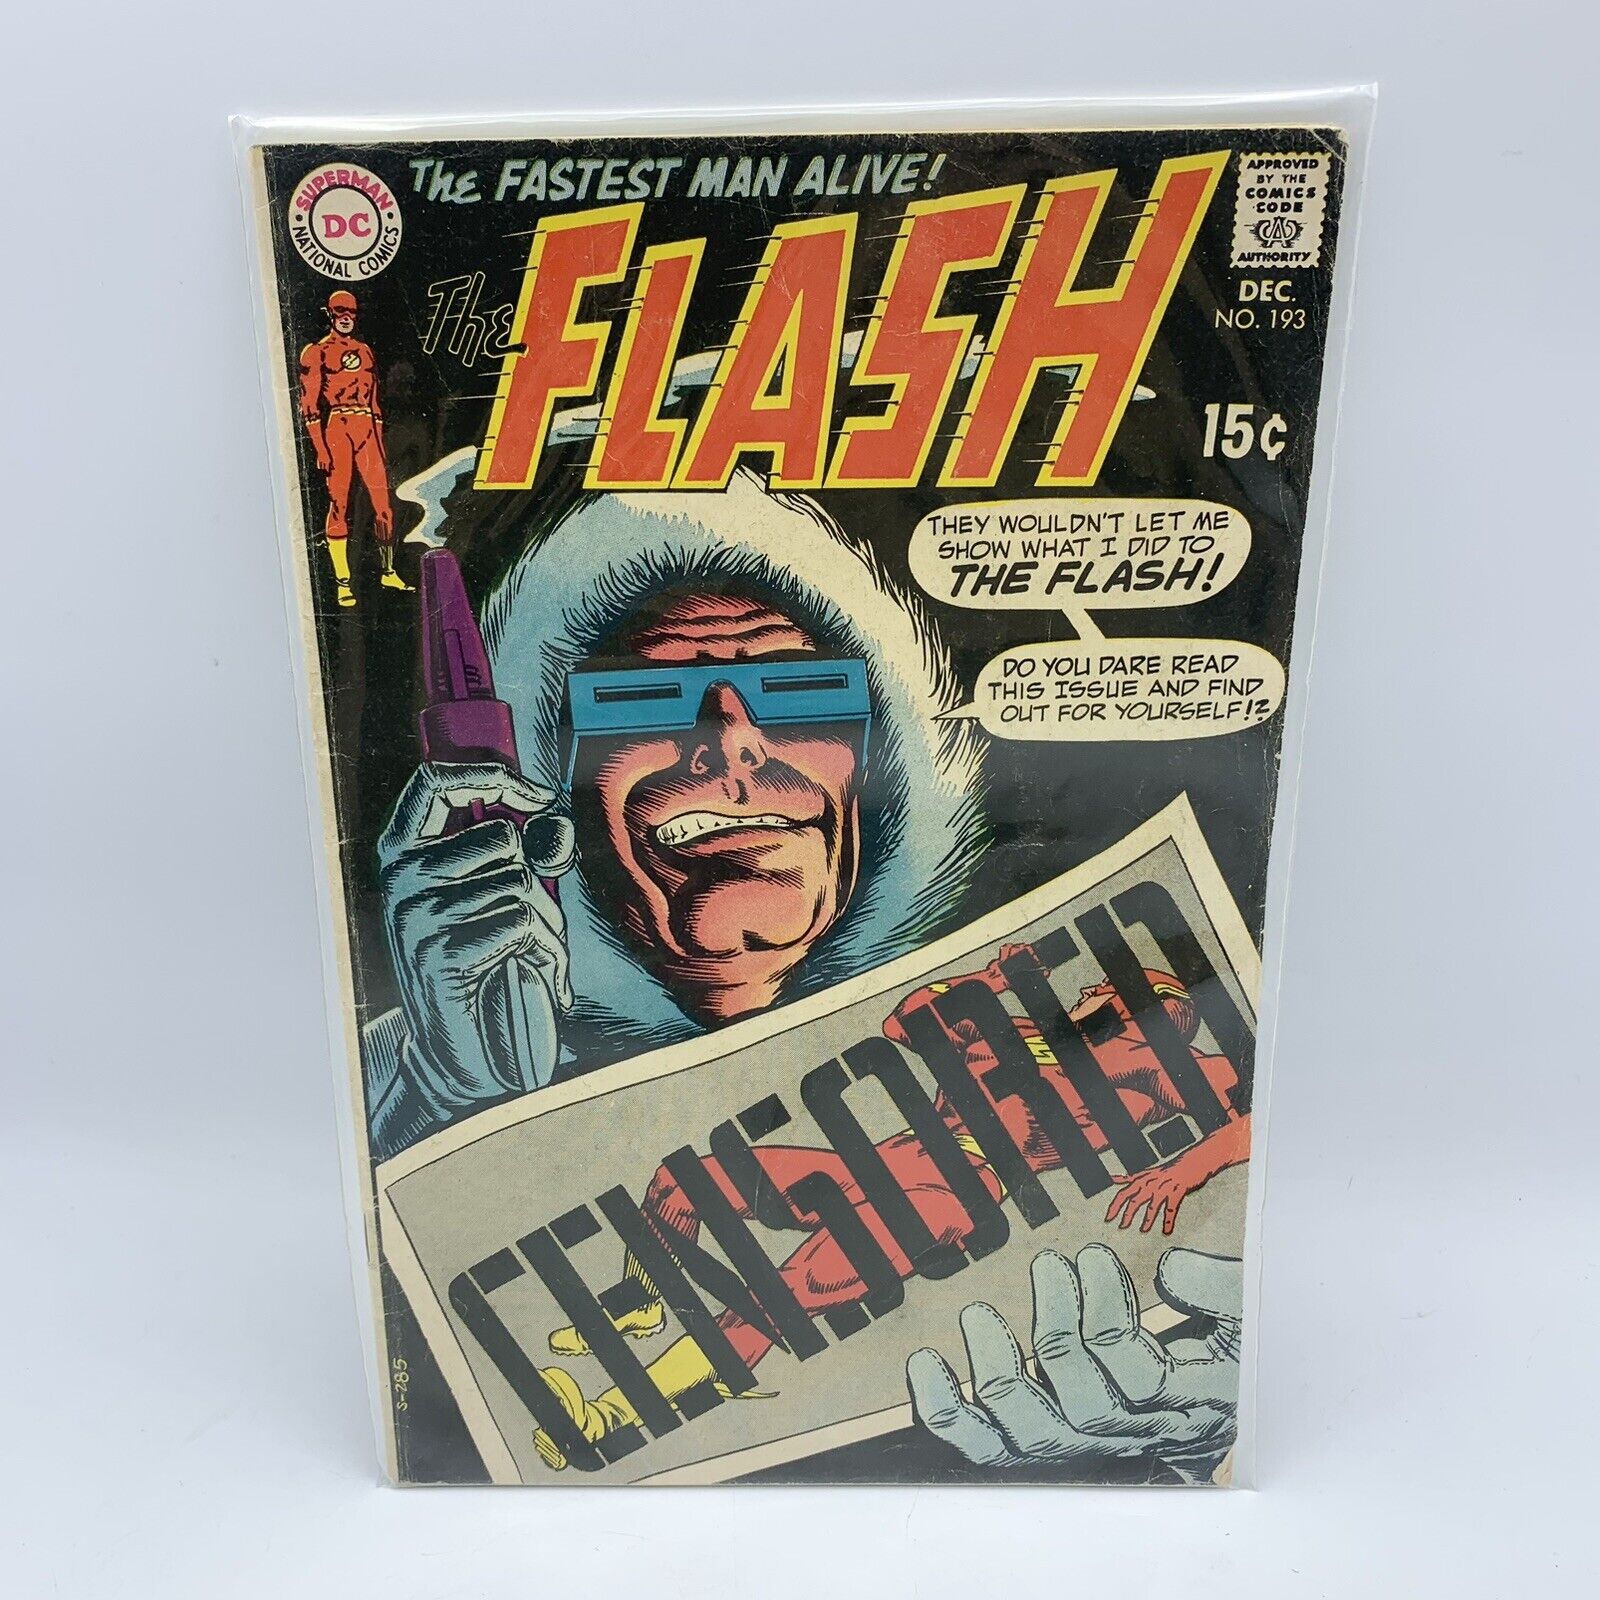 The FLASH #193 Vintage DC Comics Dec. 1969